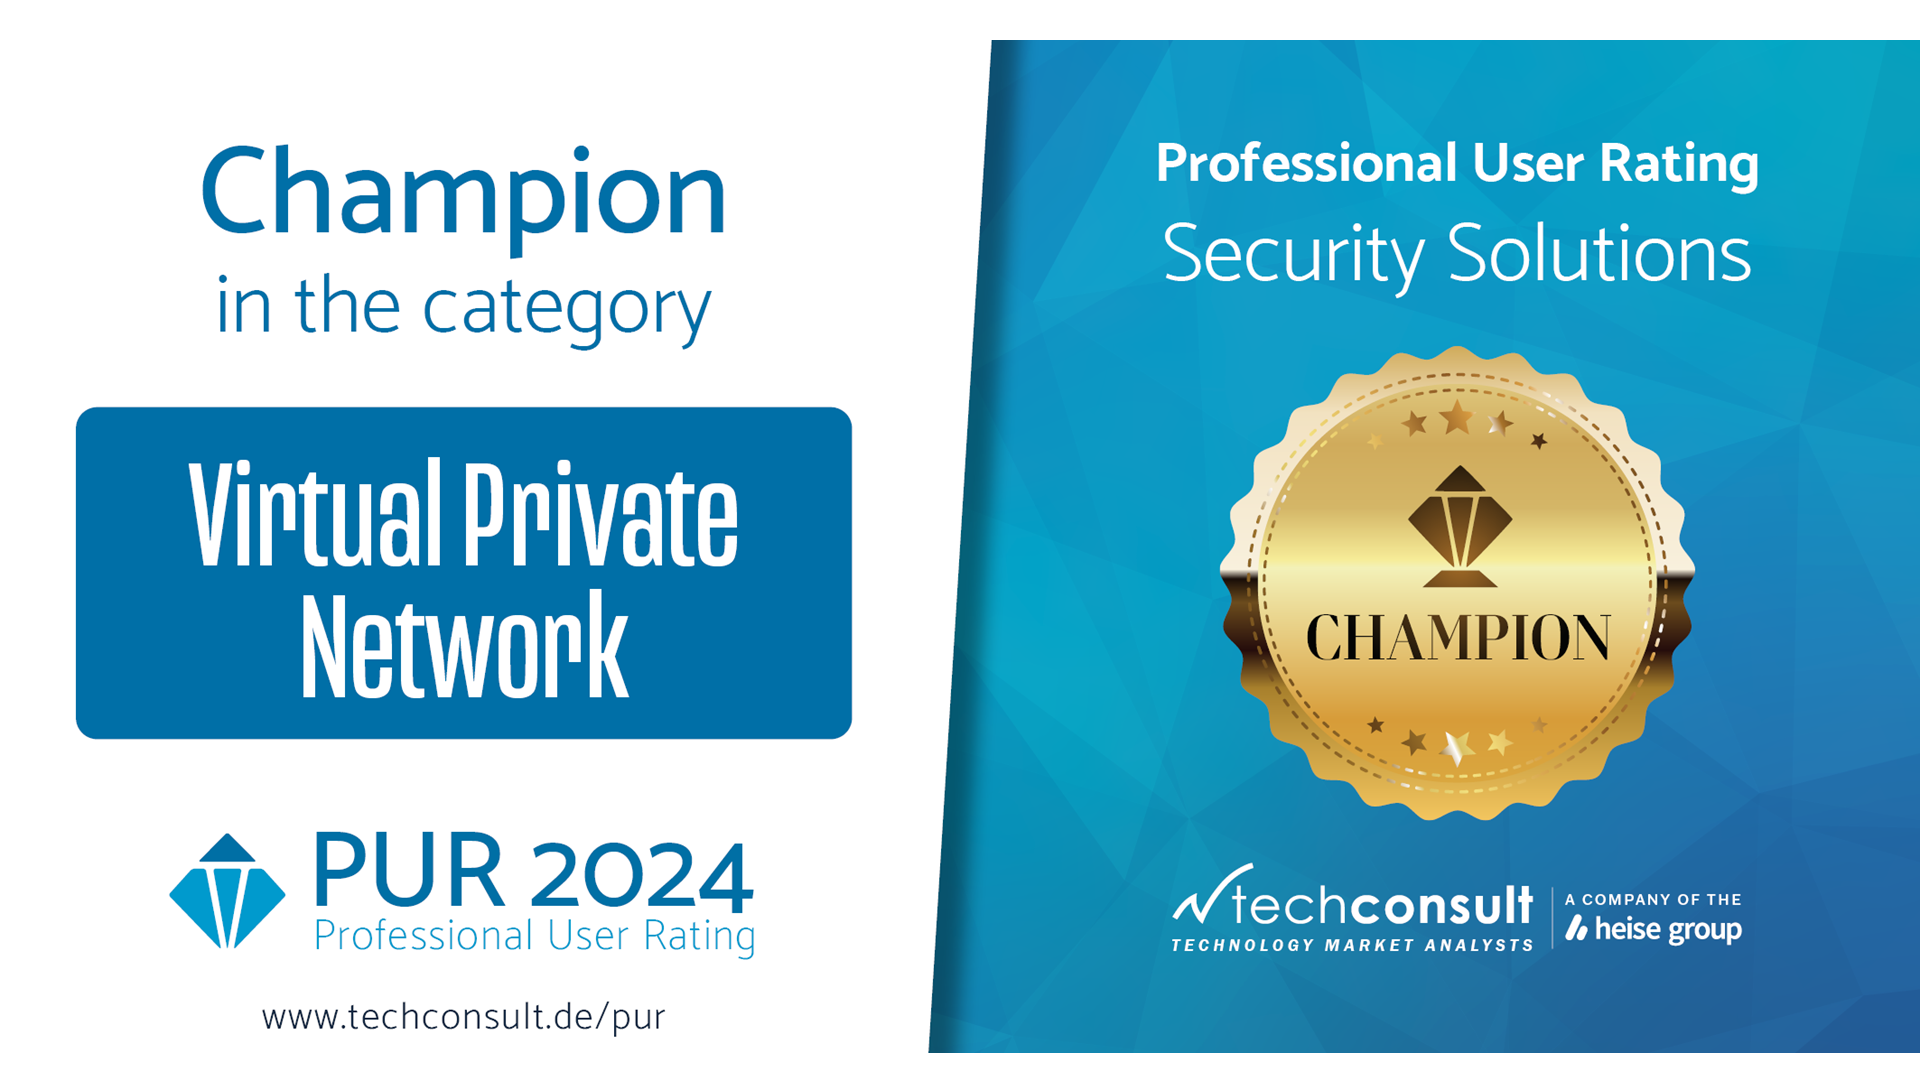 LANCOM VPN as Professional User Rating Champion 2024